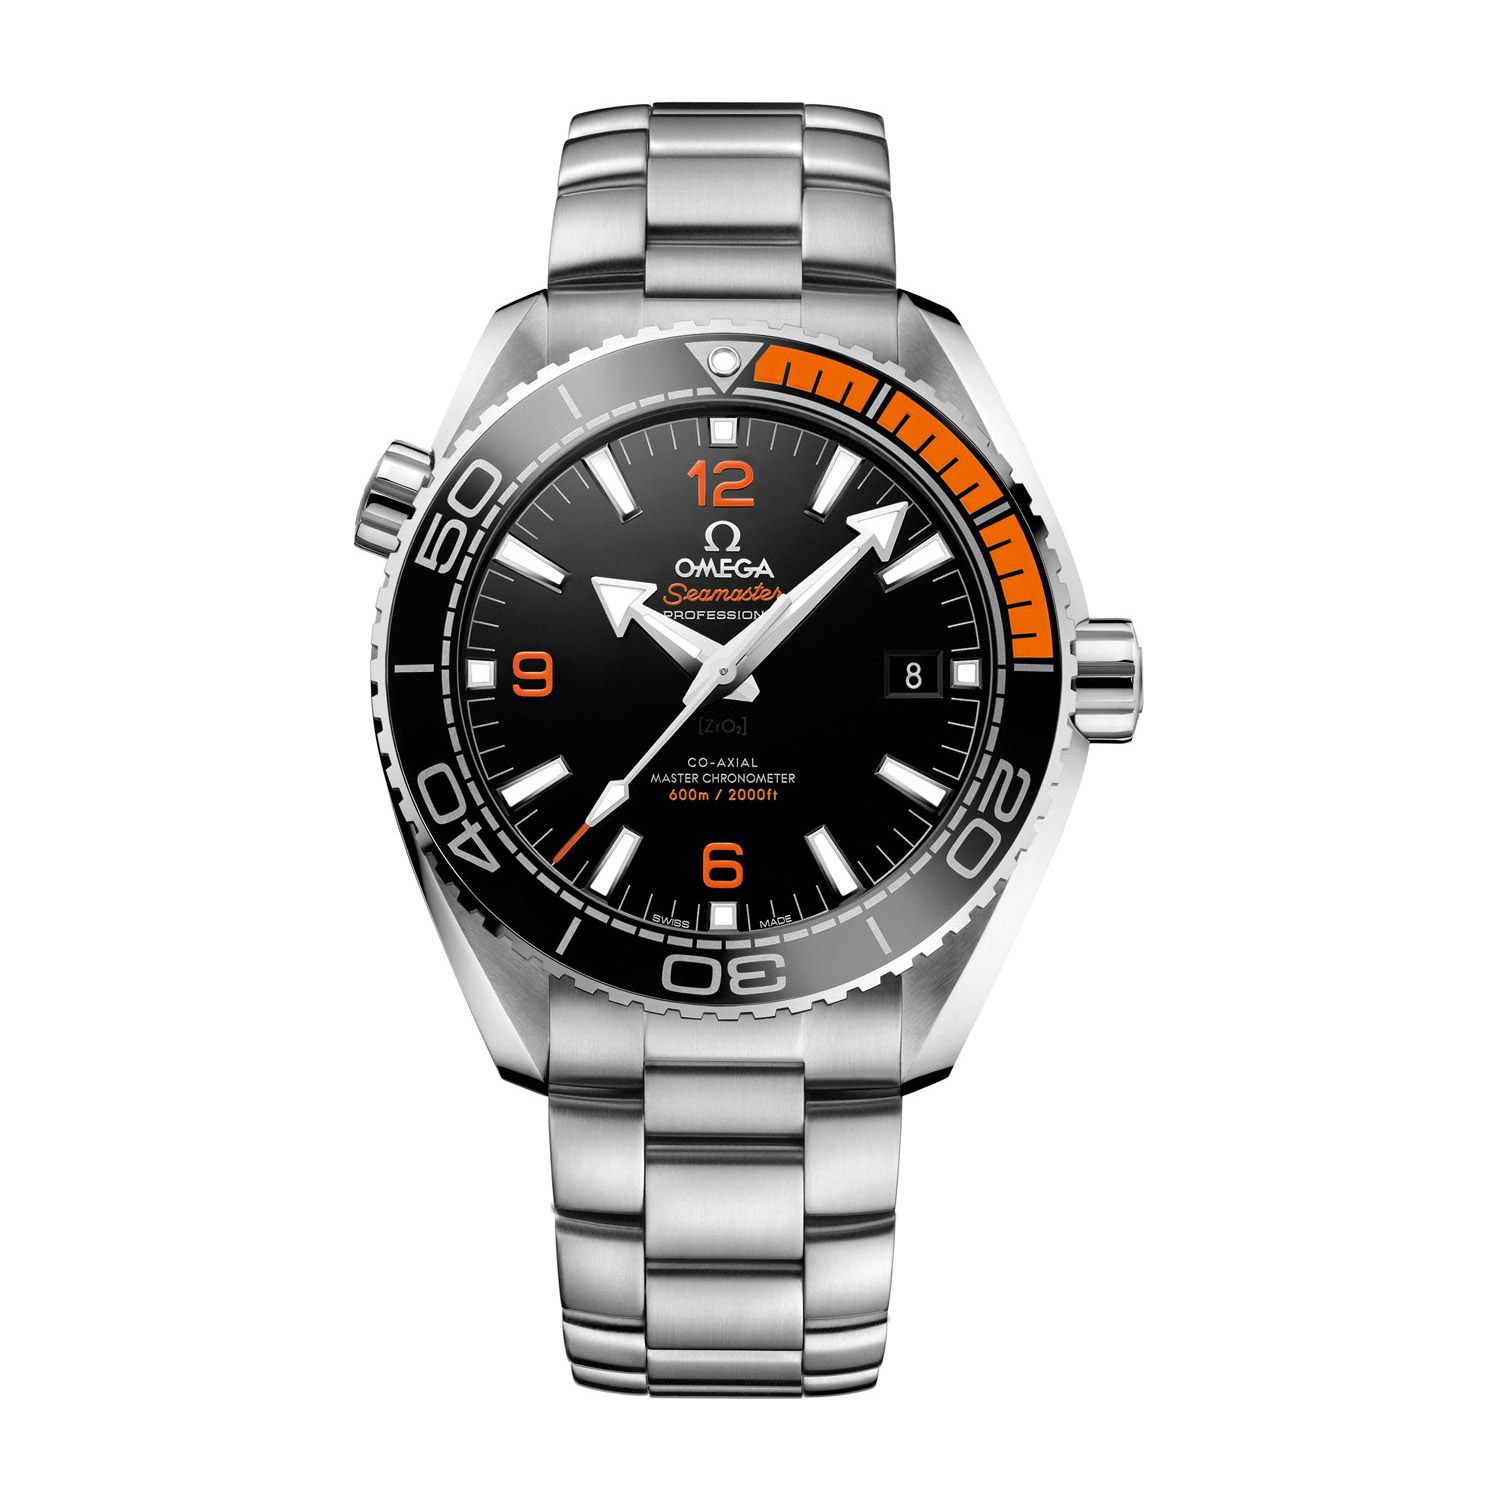 Photos - Wrist Watch Omega Seamaster Planet Ocean Men's Black & Stainless Steel Bracelet Watch 